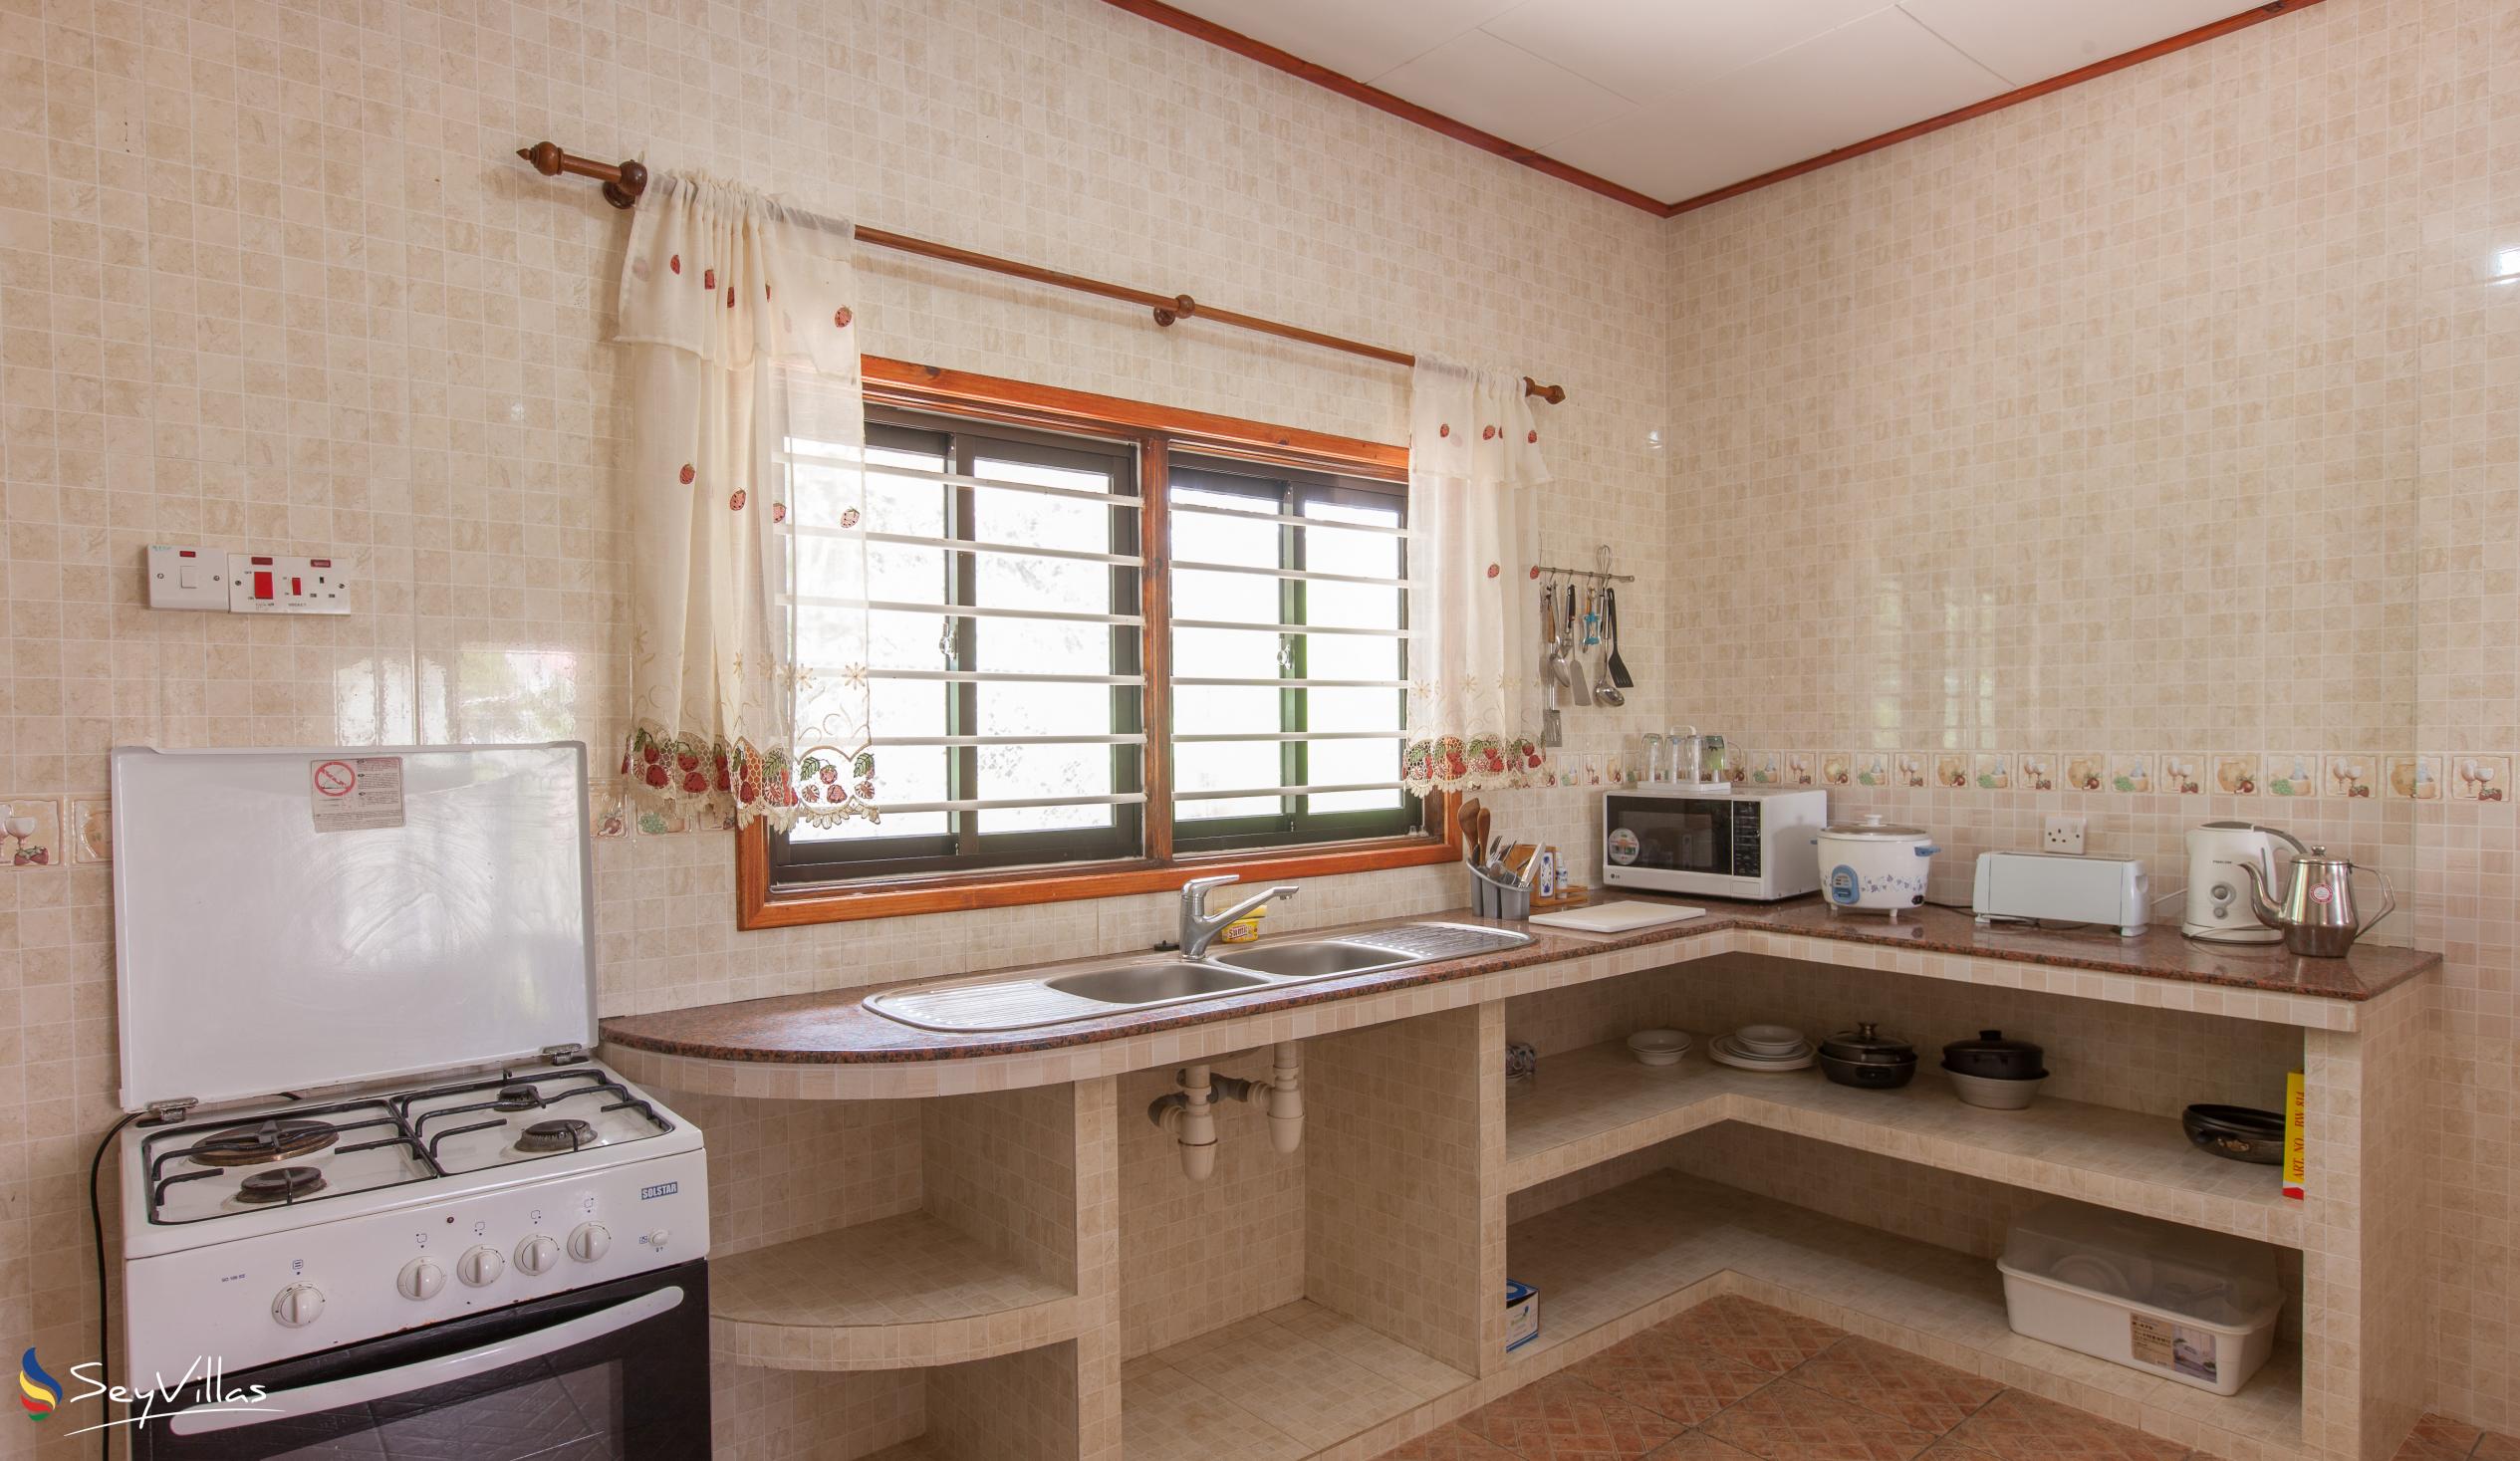 Foto 56: Zerof Self Catering  Apartments - Appartamento con 3 camere - La Digue (Seychelles)